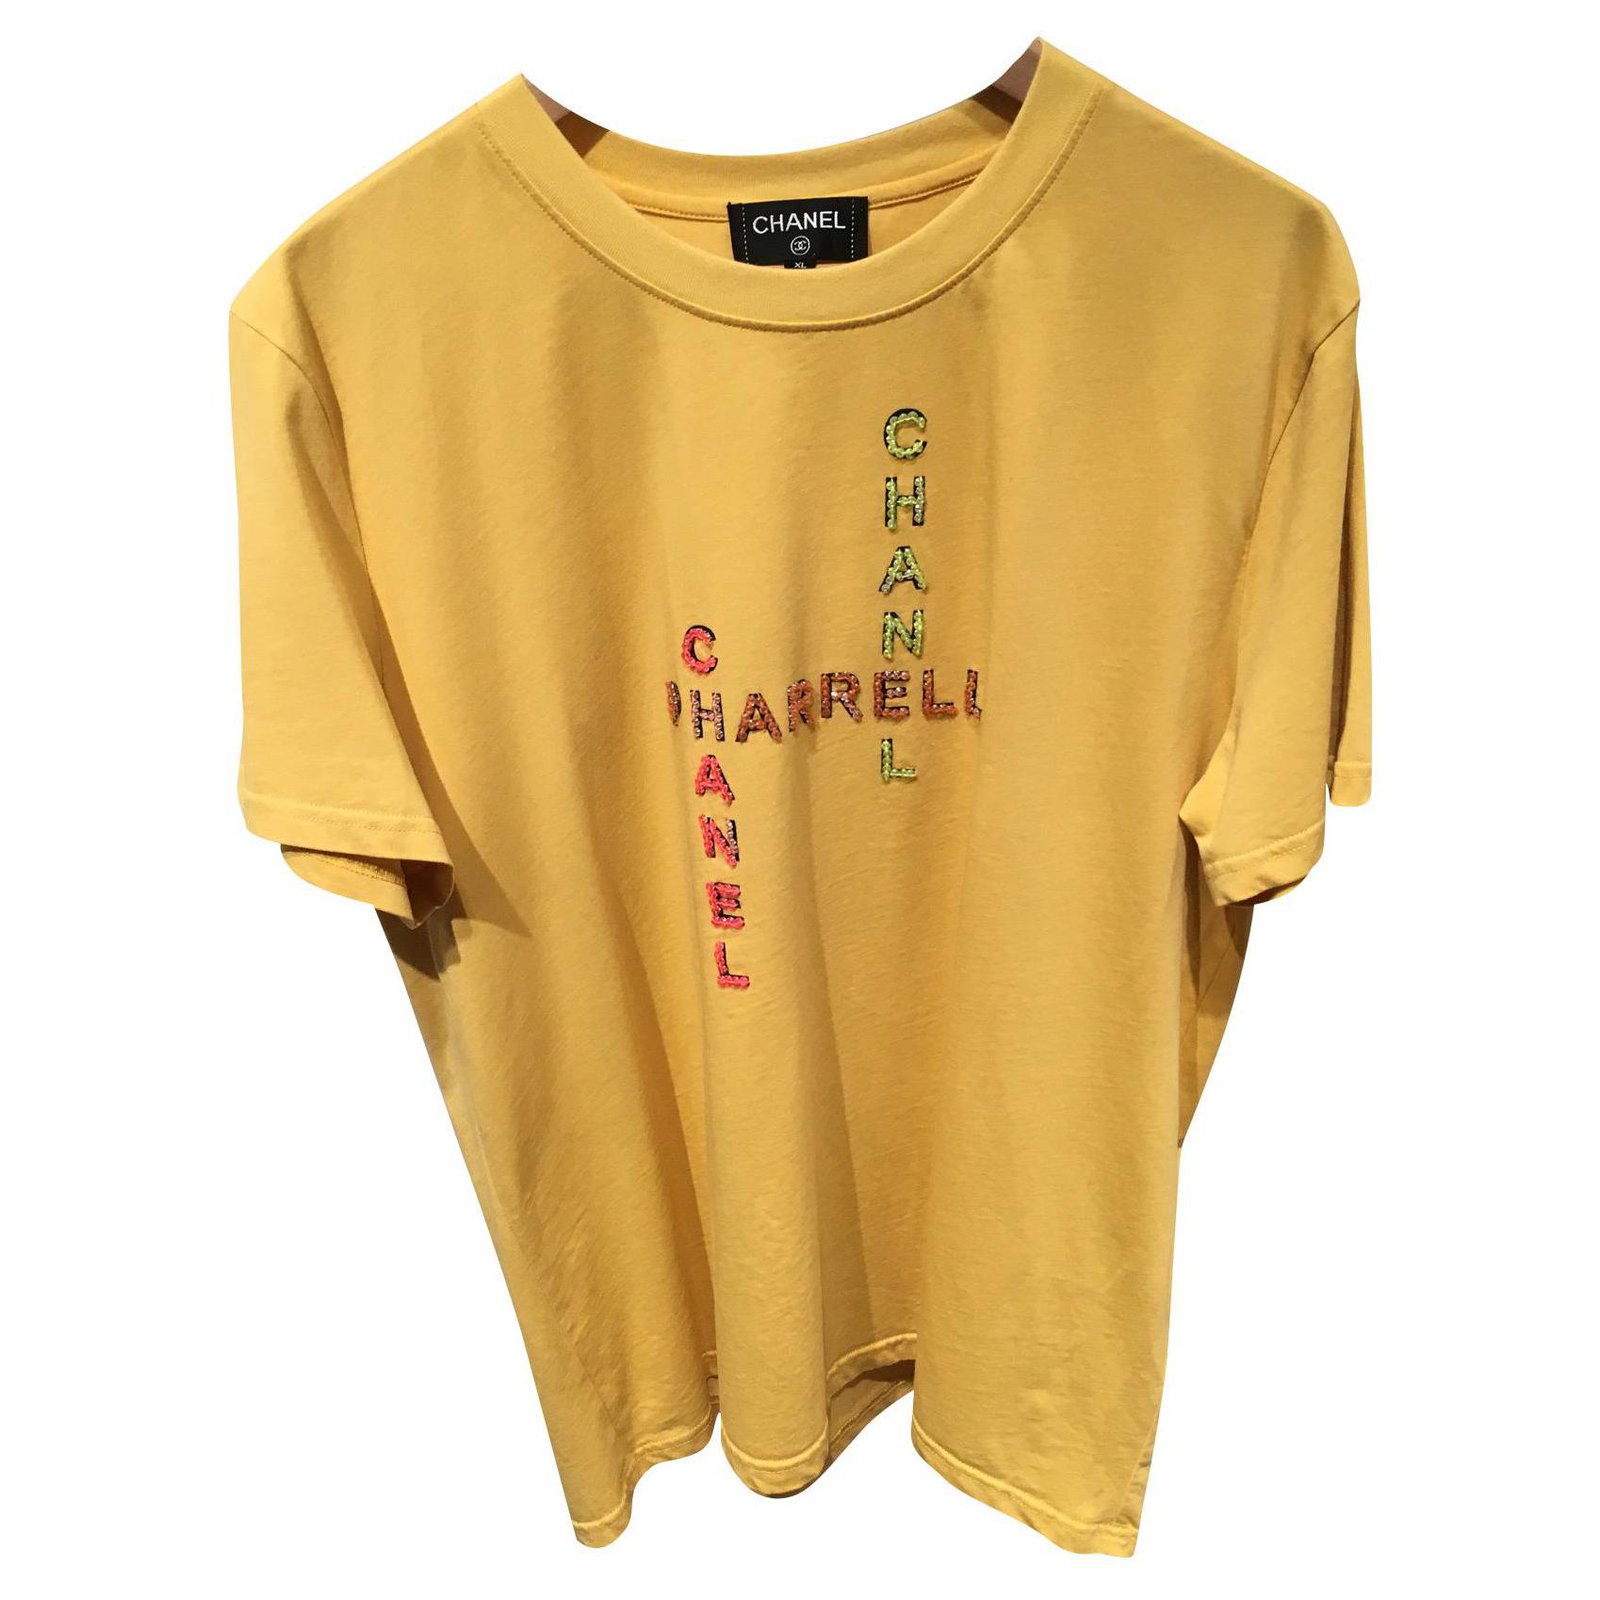 chanel pharrell 219 price